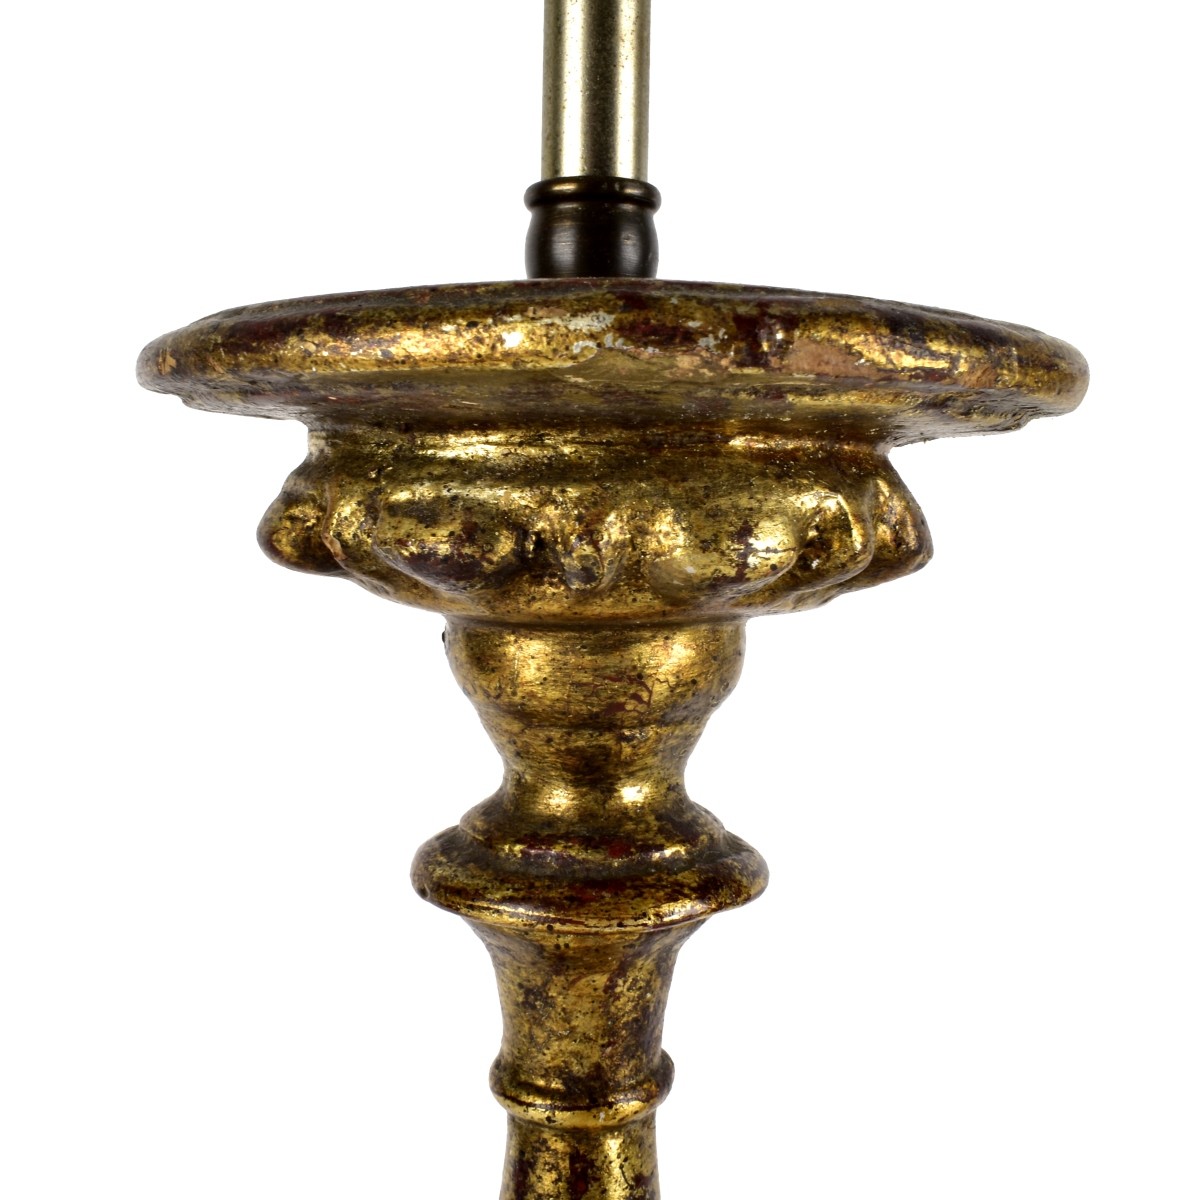 Pair of Louis XVI Style Giltwood Lamps